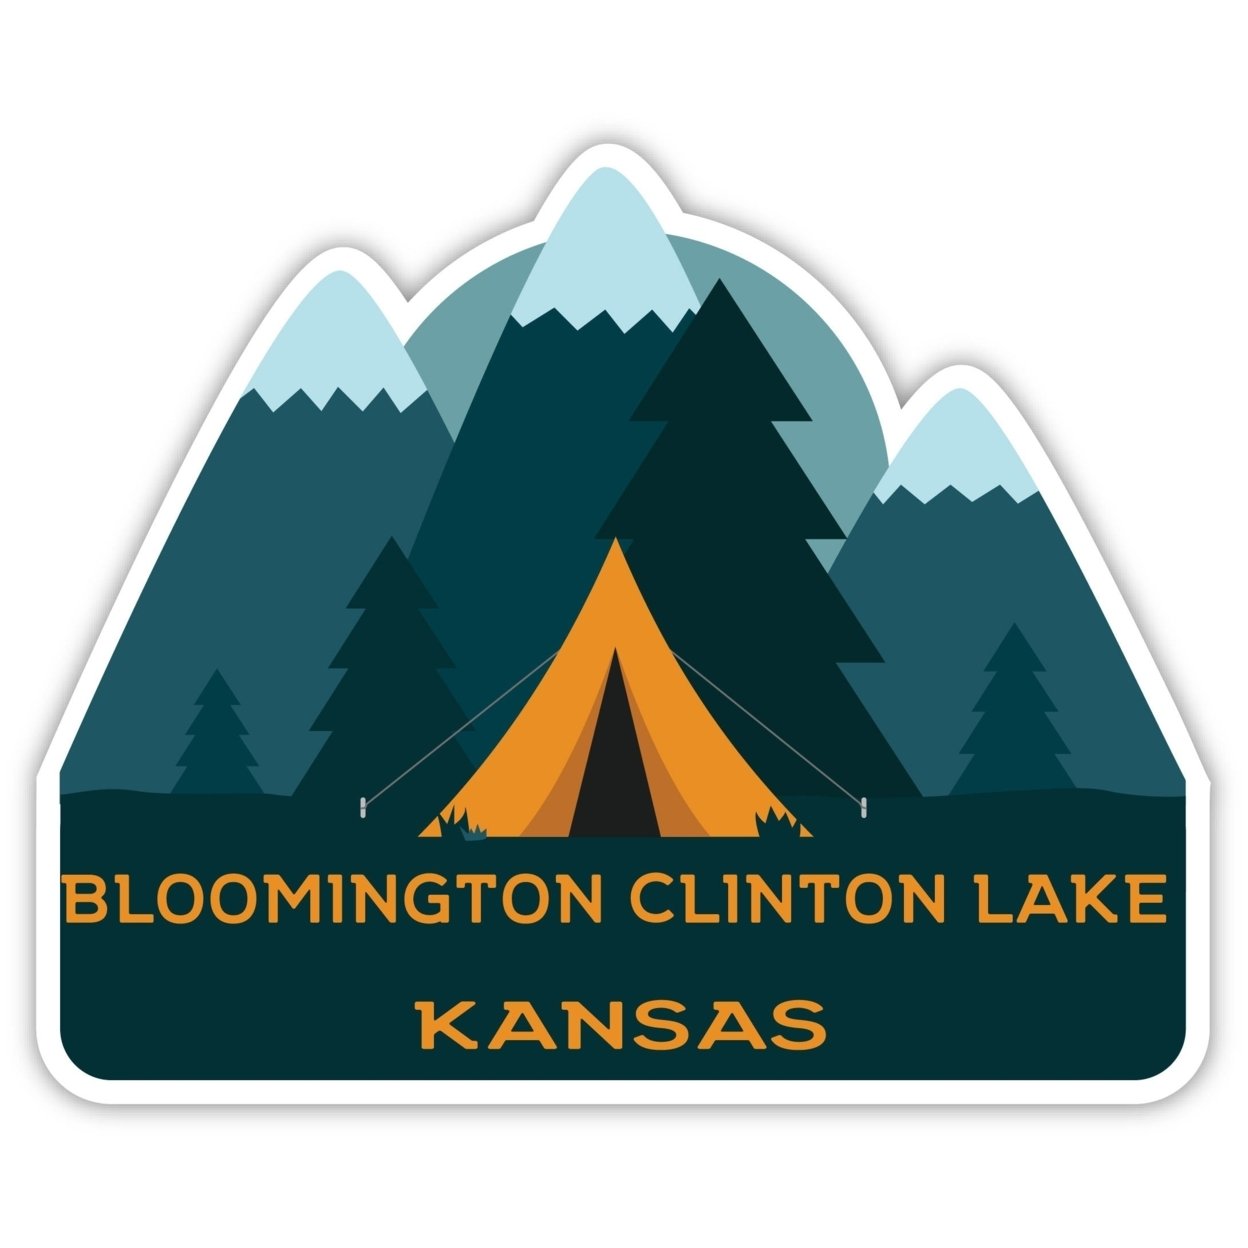 Bloomington Clinton Lake Kansas Souvenir Decorative Stickers (Choose Theme And Size) - 4-Pack, 2-Inch, Tent